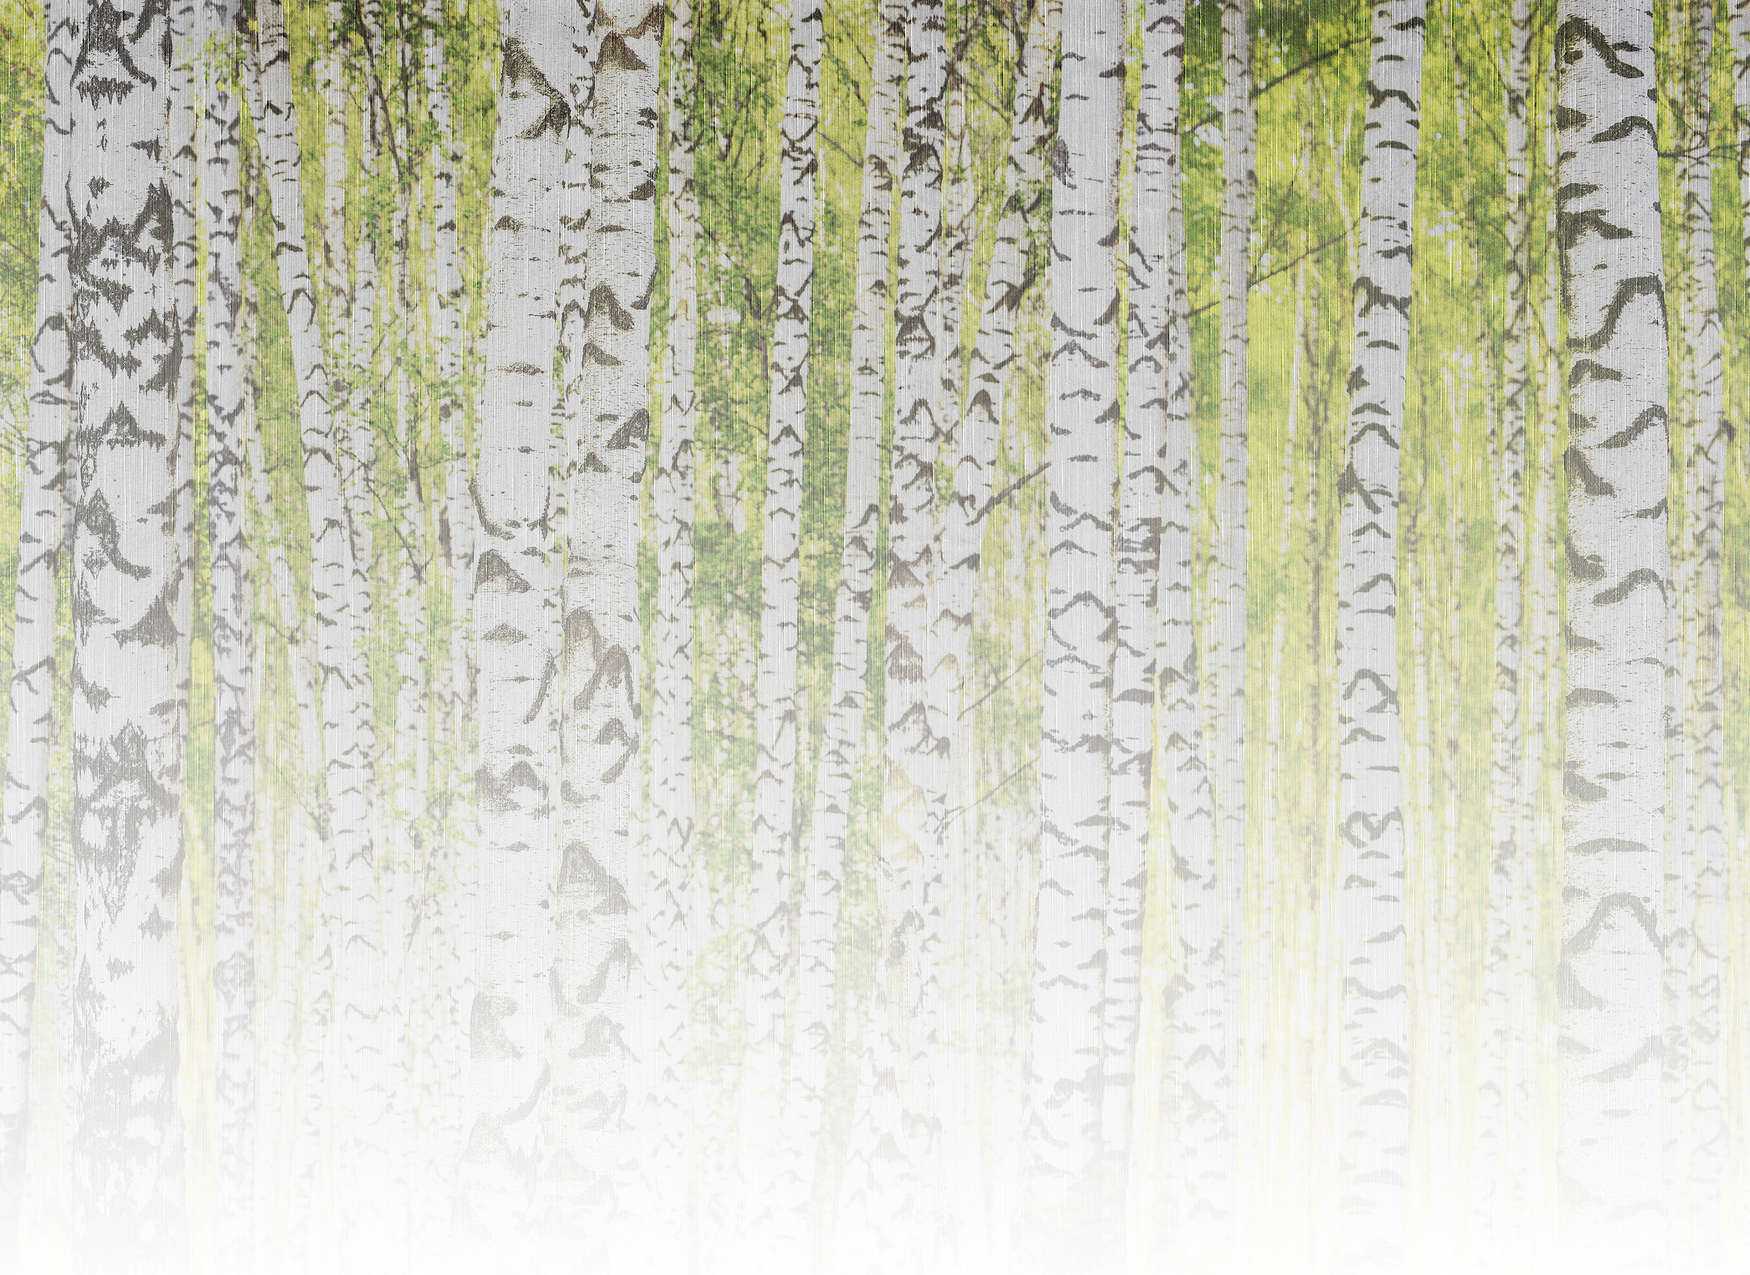             Mural de pared con bosque de abedules en textura de lino - verde, blanco, negro
        